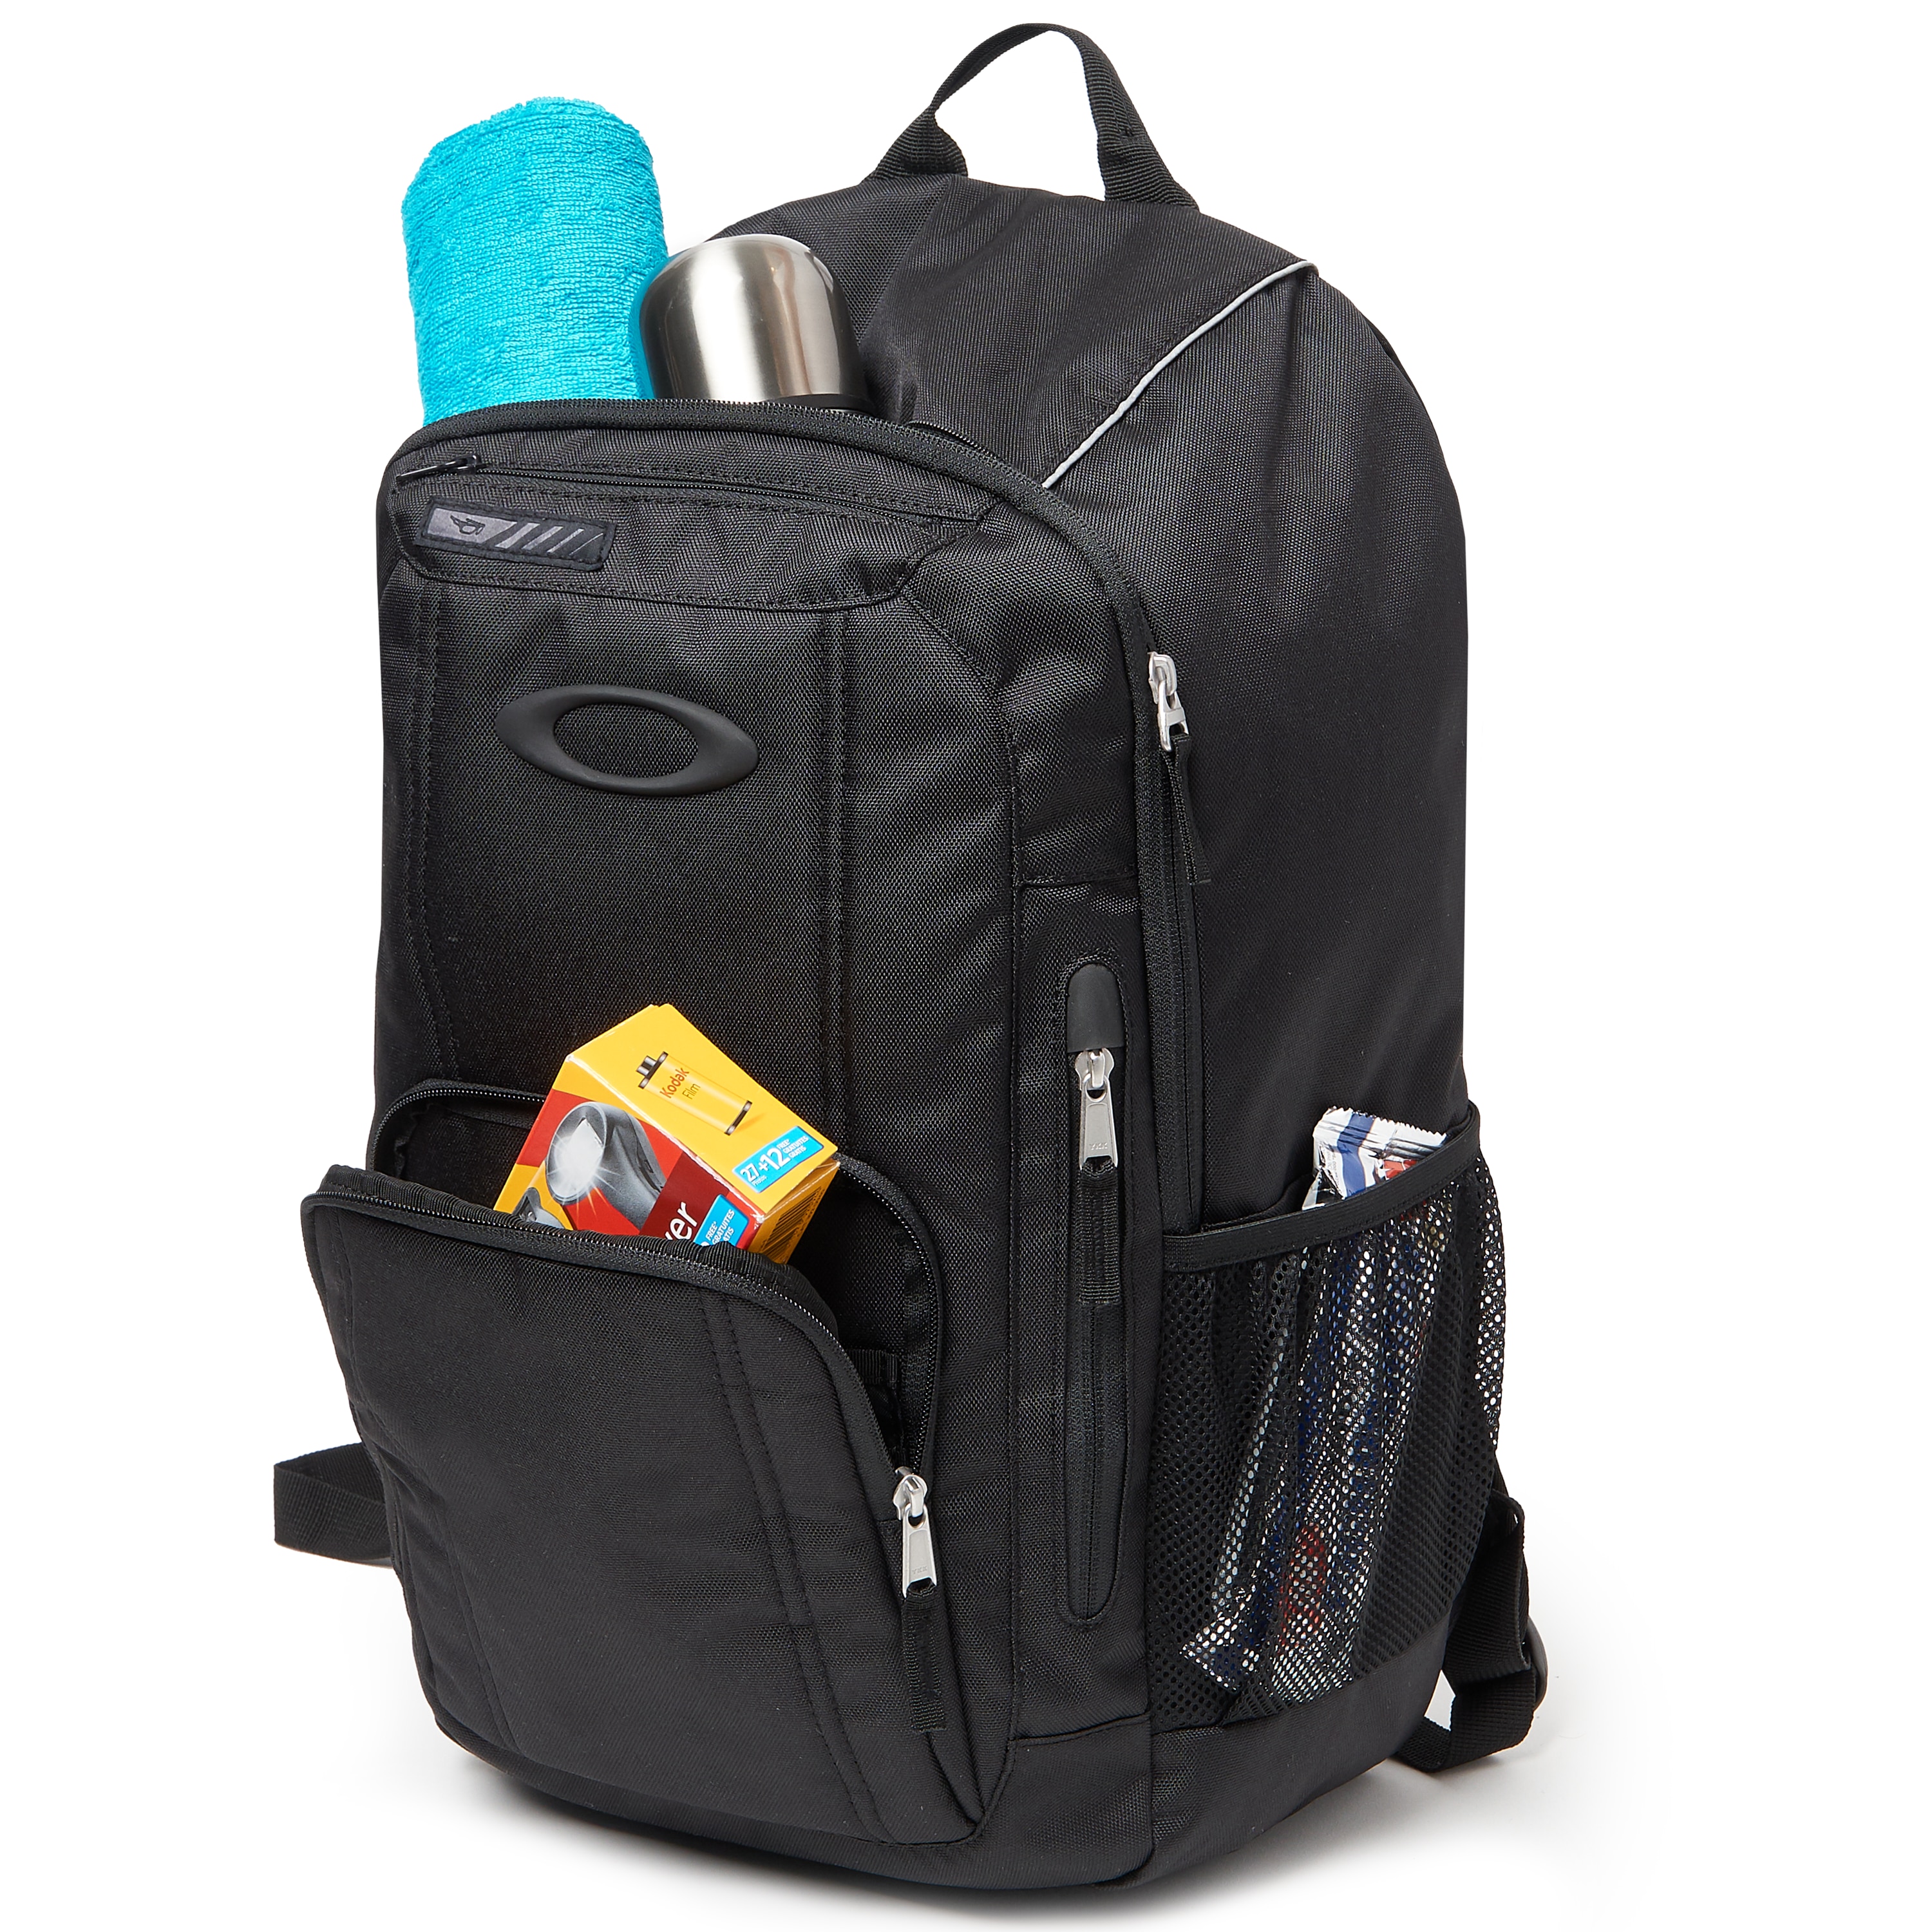 oakley enduro 2.0 backpack